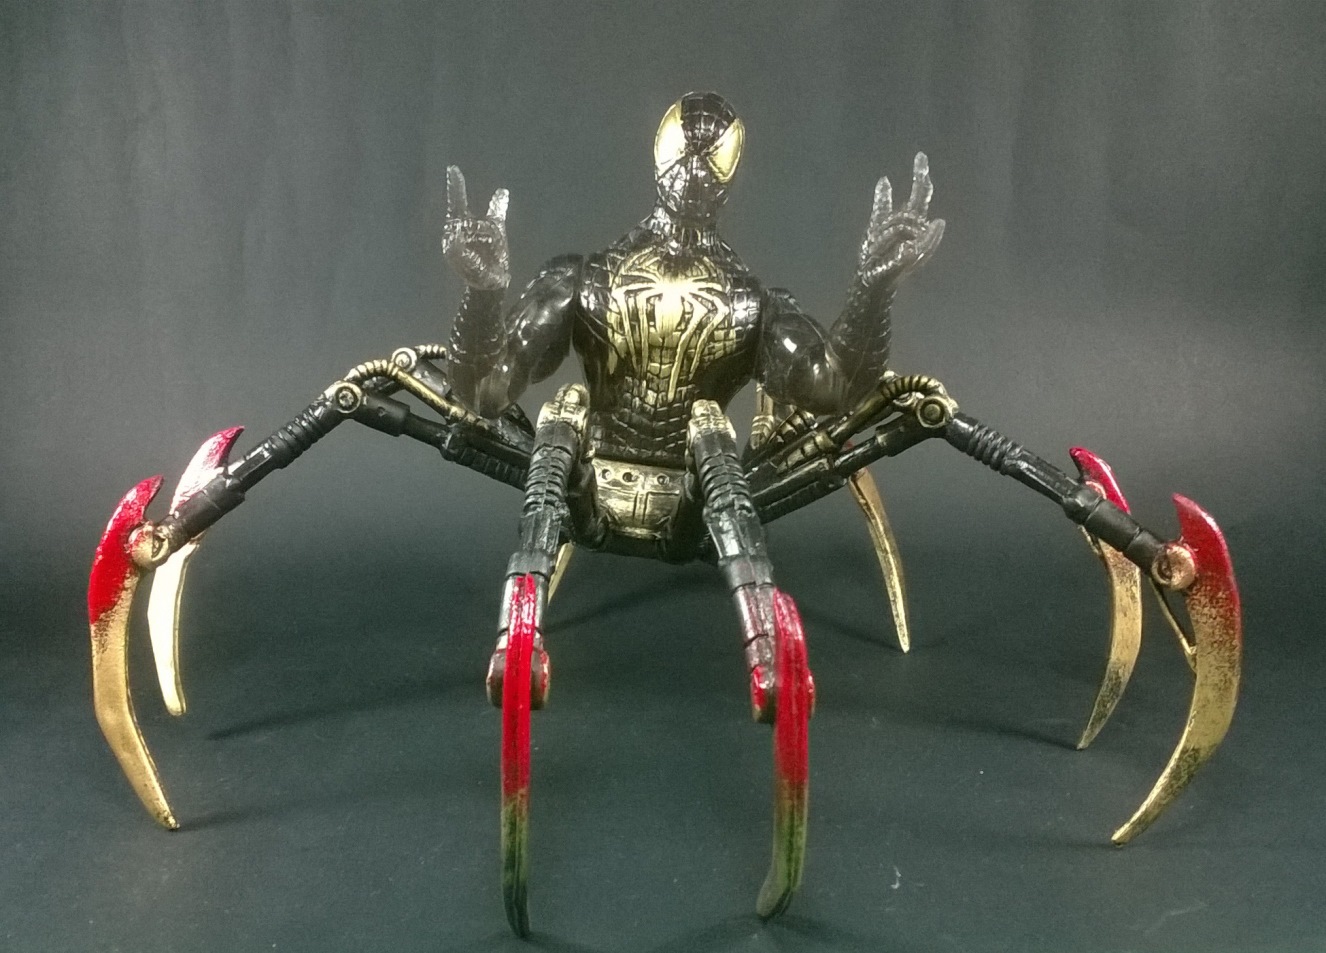 DOCTOR FRIKI: SPIDER-MAN 